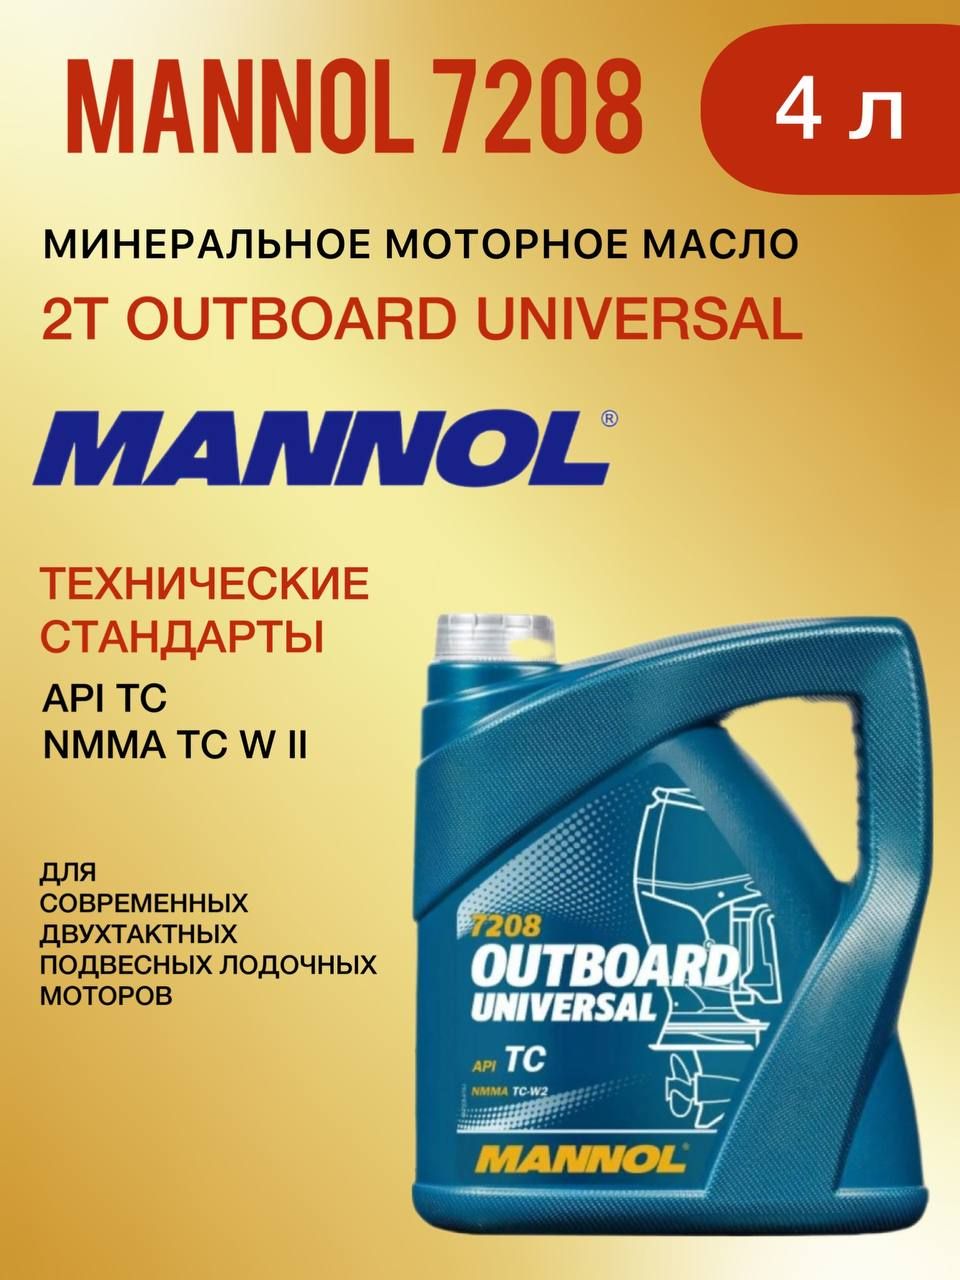 Лодочное масло манол. Mn7208-20_7208 Mannol outboard Universal 20 л. минеральное моторное масло 2т. Масло моторное outboard Universal (4л). Манол 2т оутборд универсал. Mineral Universal Oil 20w-50.